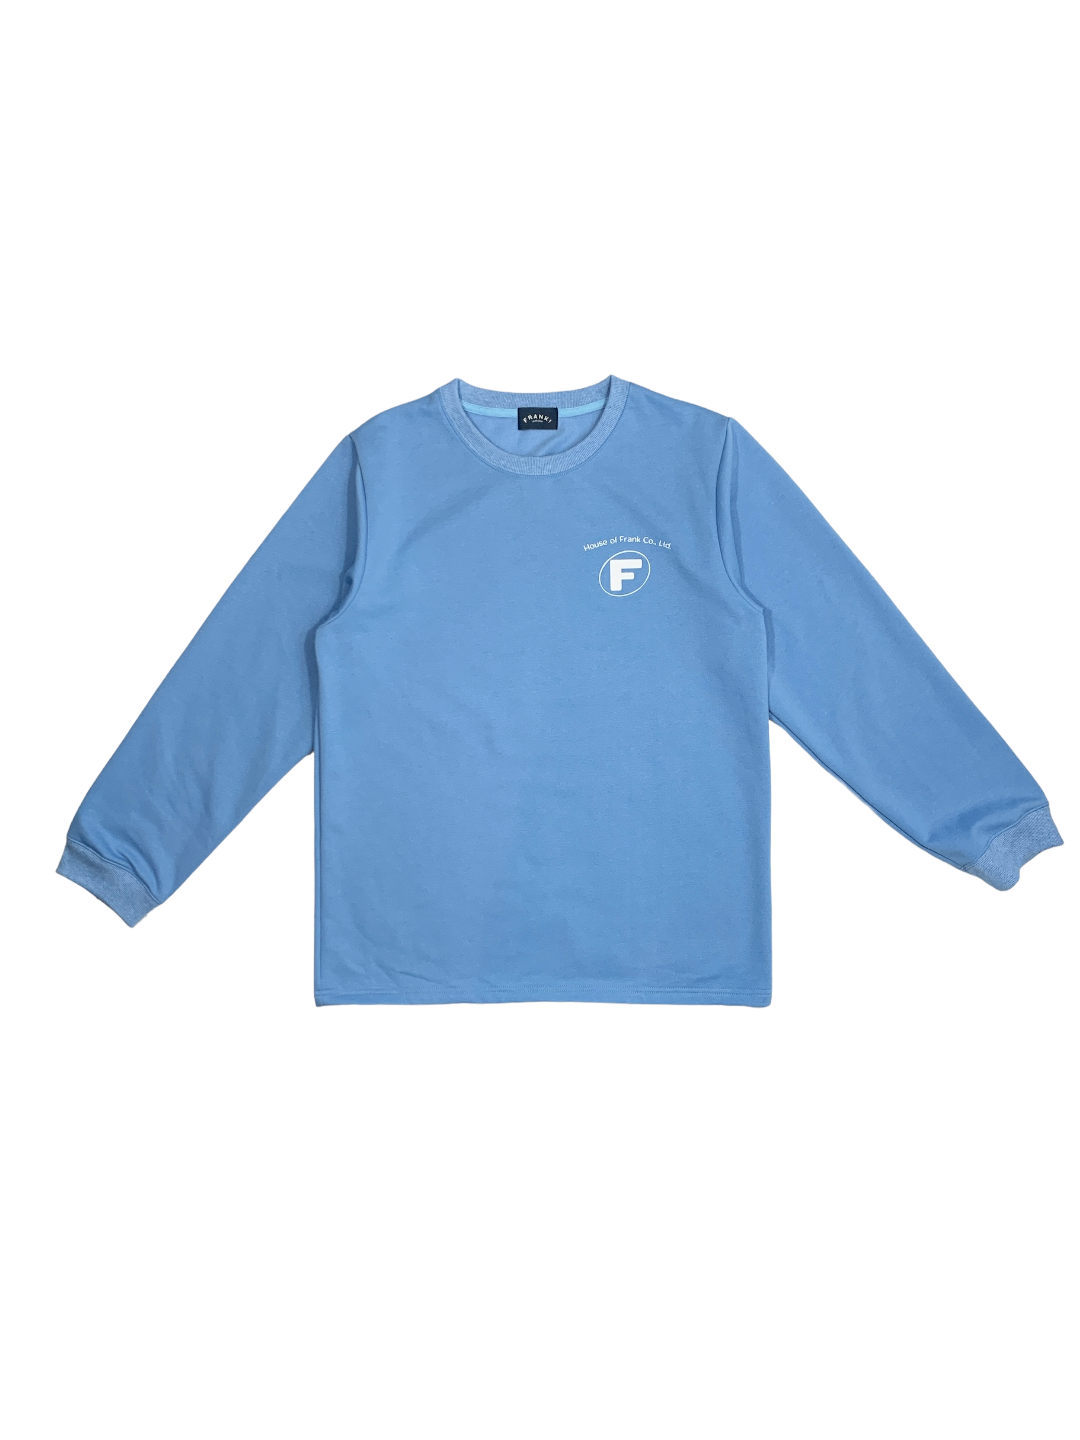 FRANK GARCON.COM Sweater (Light Blue)